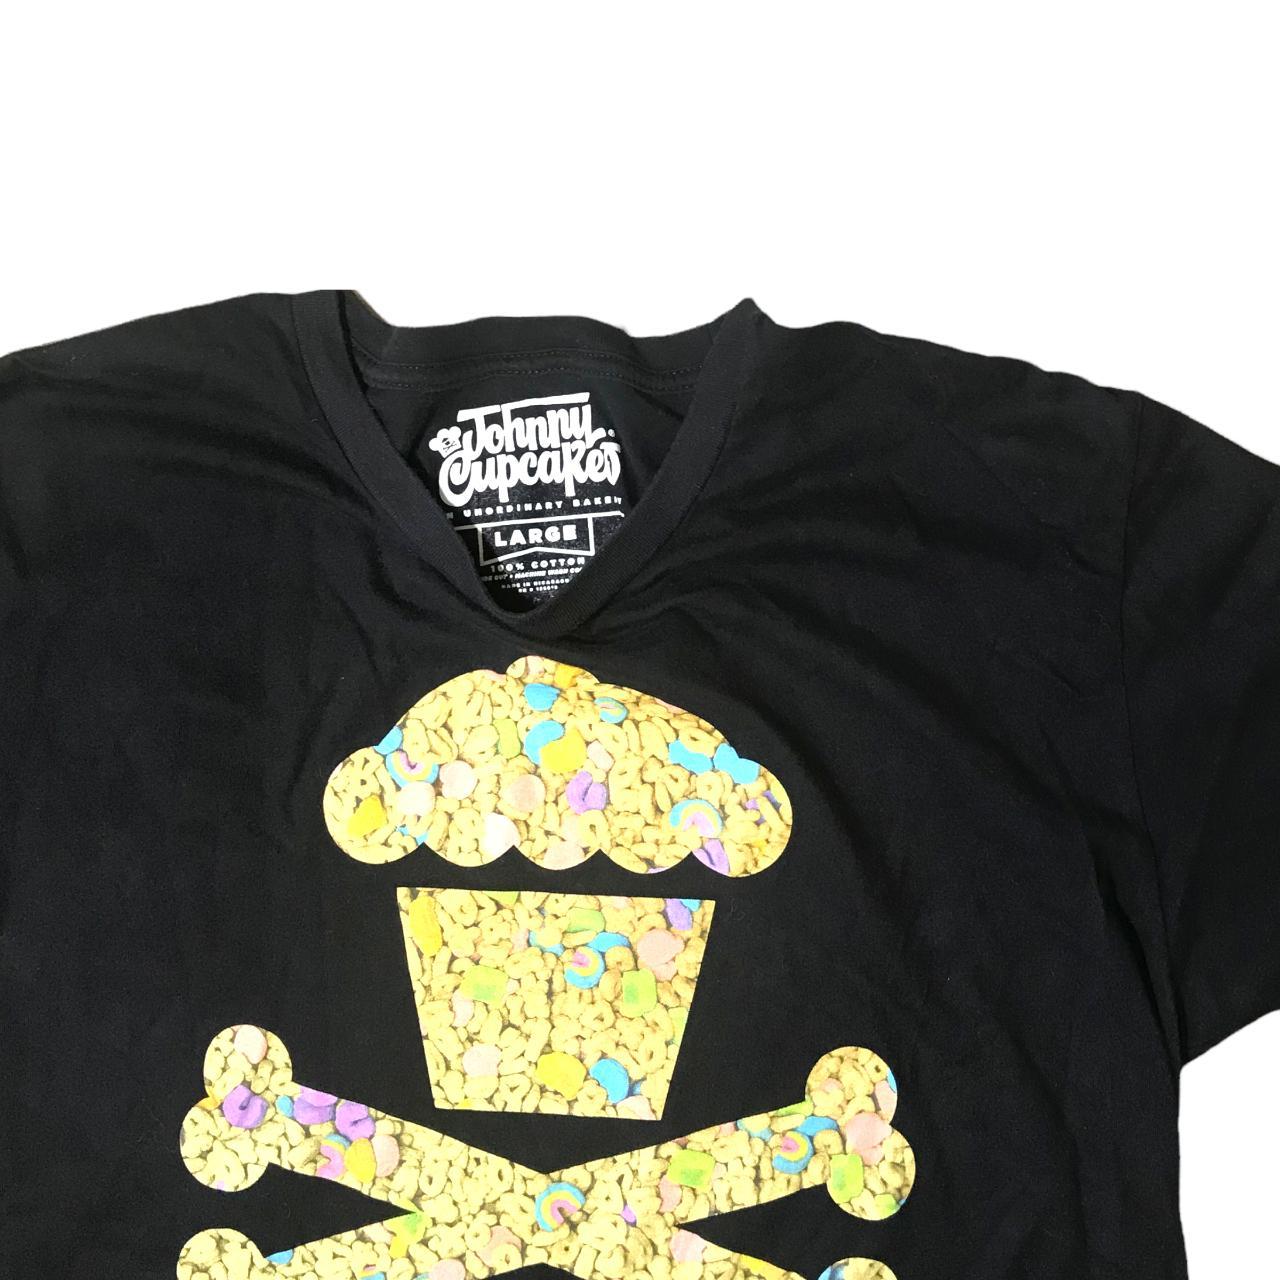 Johnny Cupcakes Men's Black T-shirt (3)